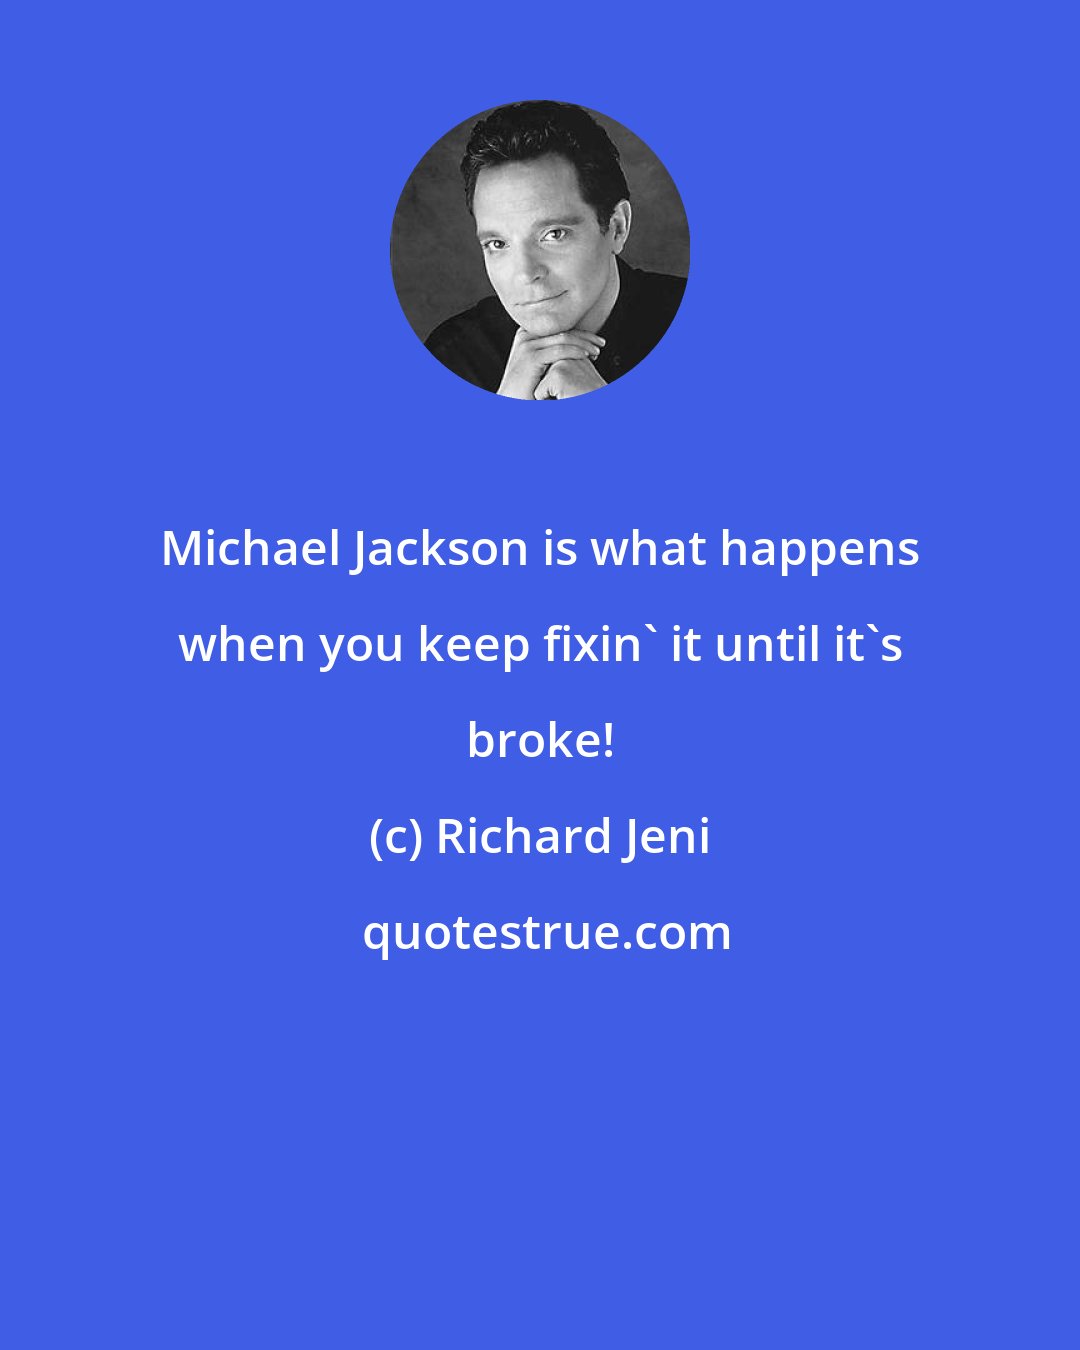 Richard Jeni: Michael Jackson is what happens when you keep fixin' it until it's broke!